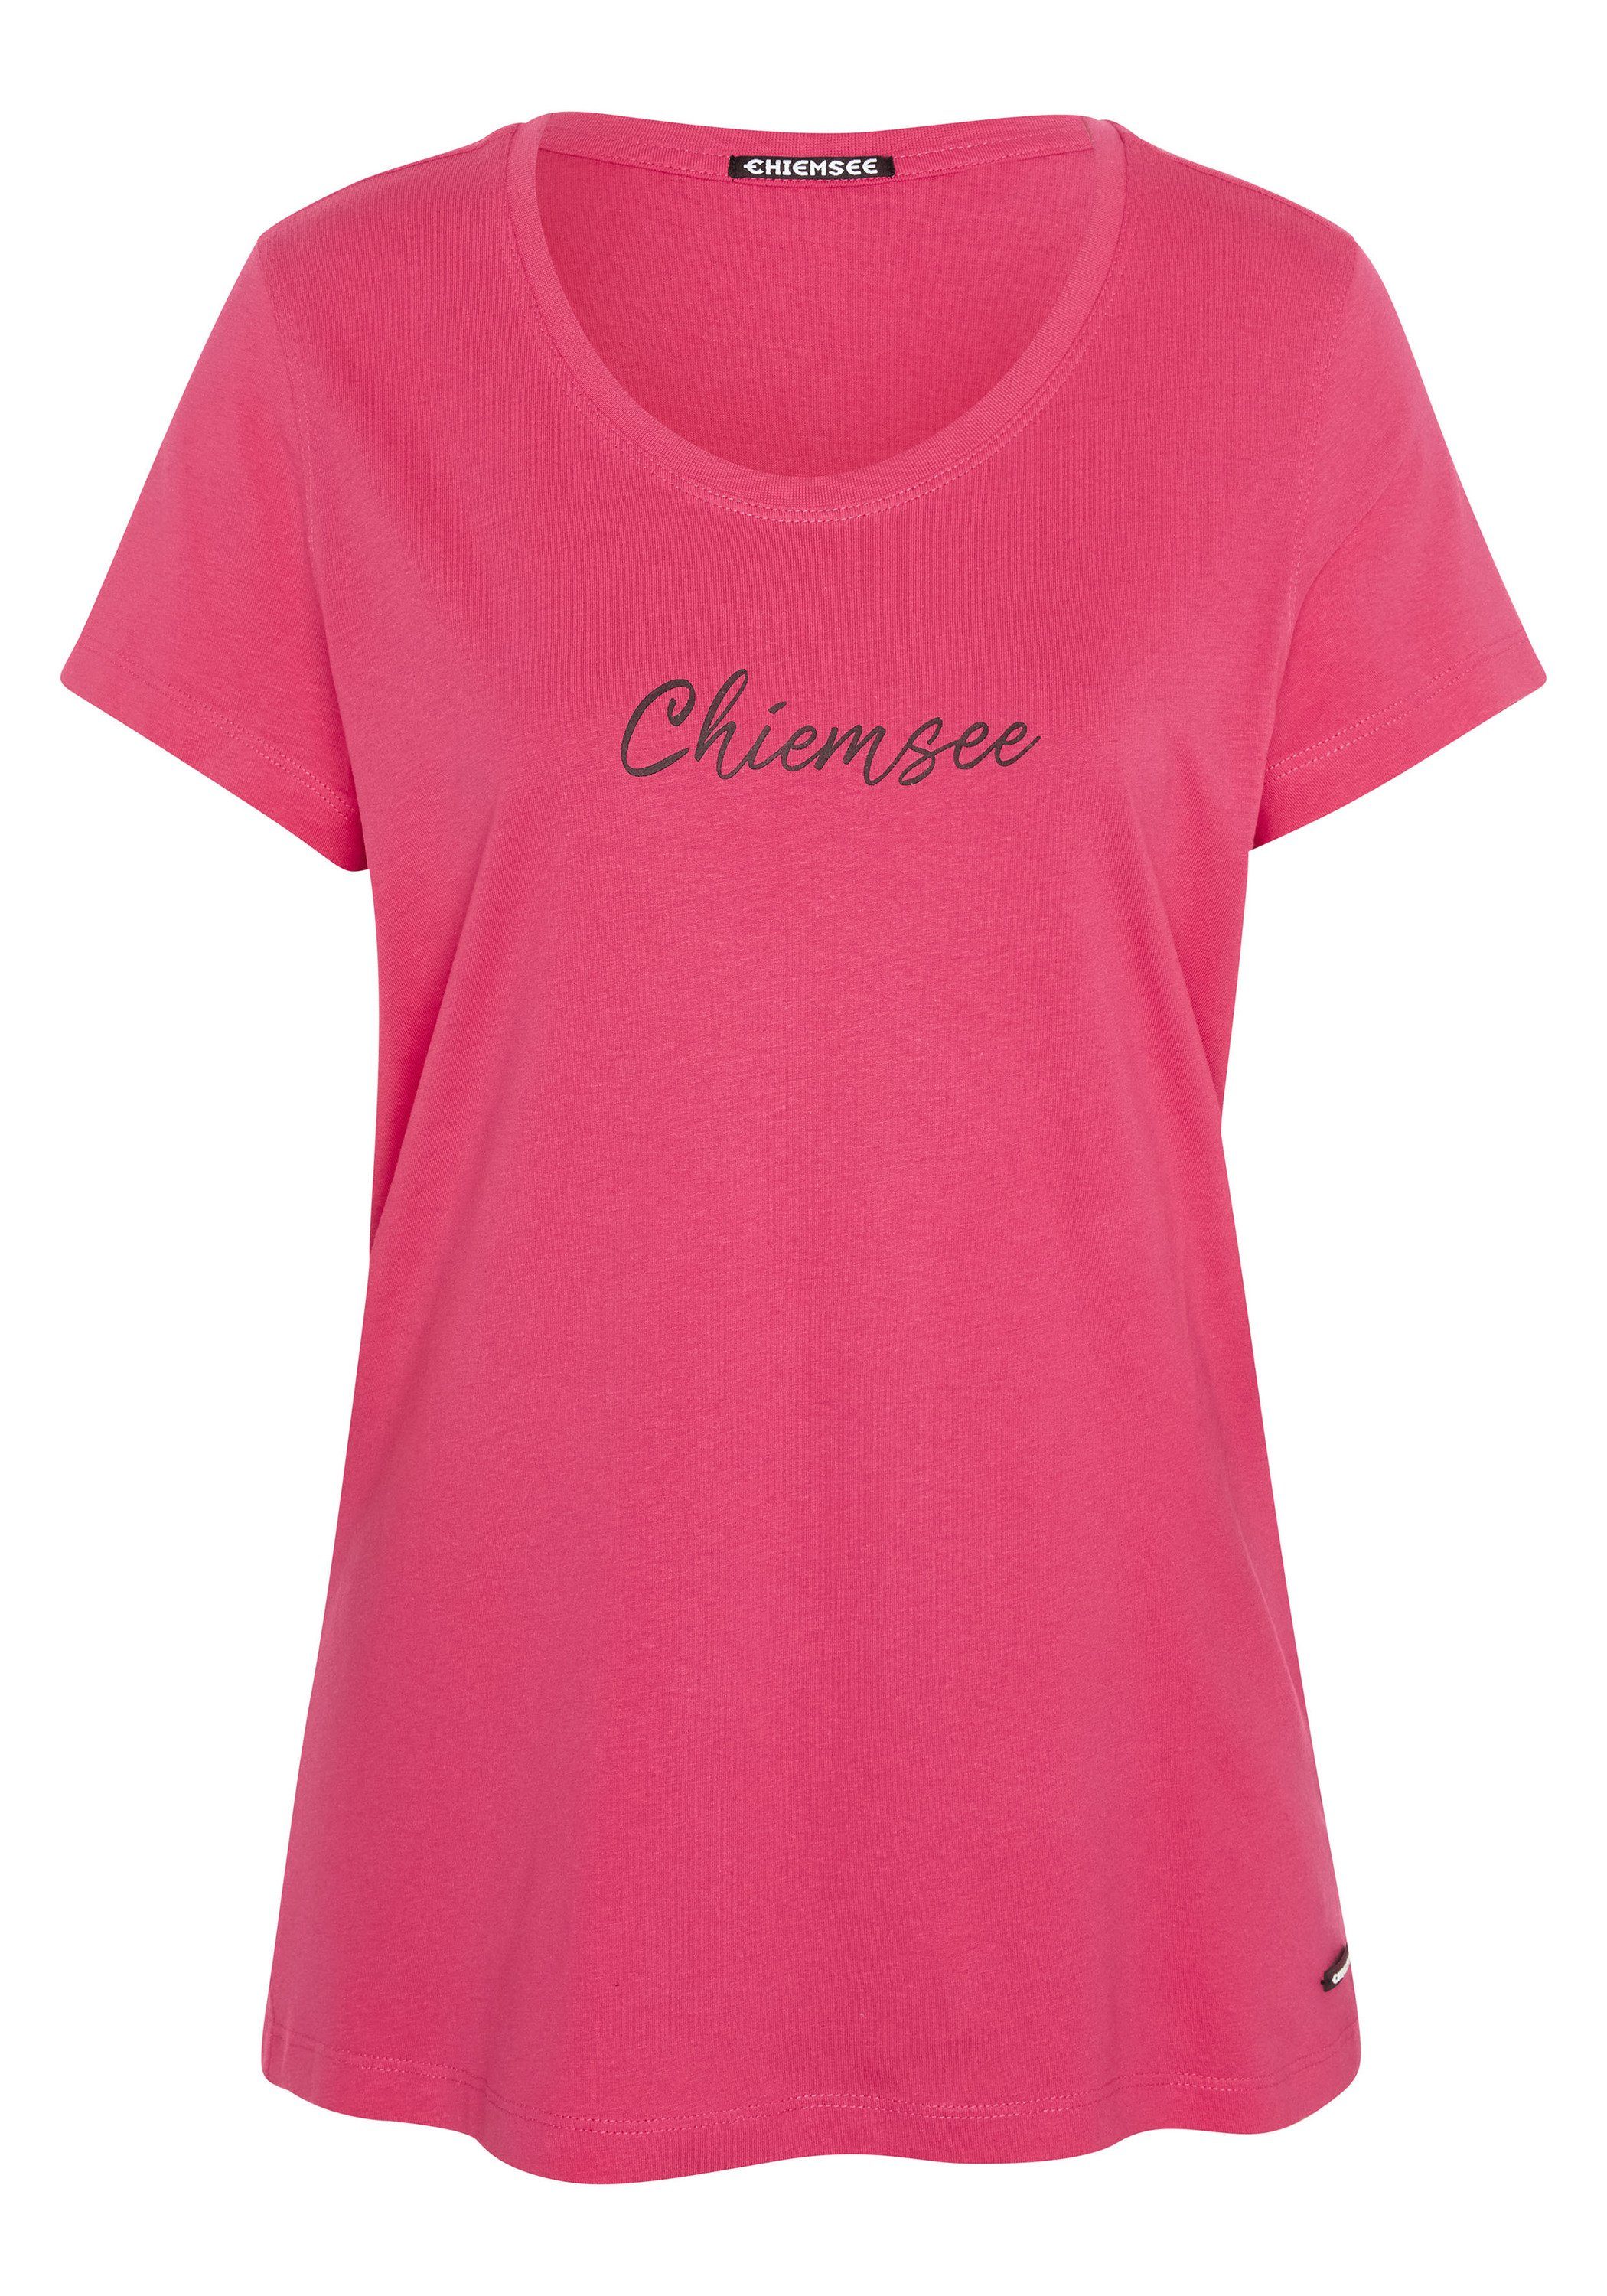 Chiemsee Print-Shirt T-Shirt im Label-Look 1 18-1754 Raspberry